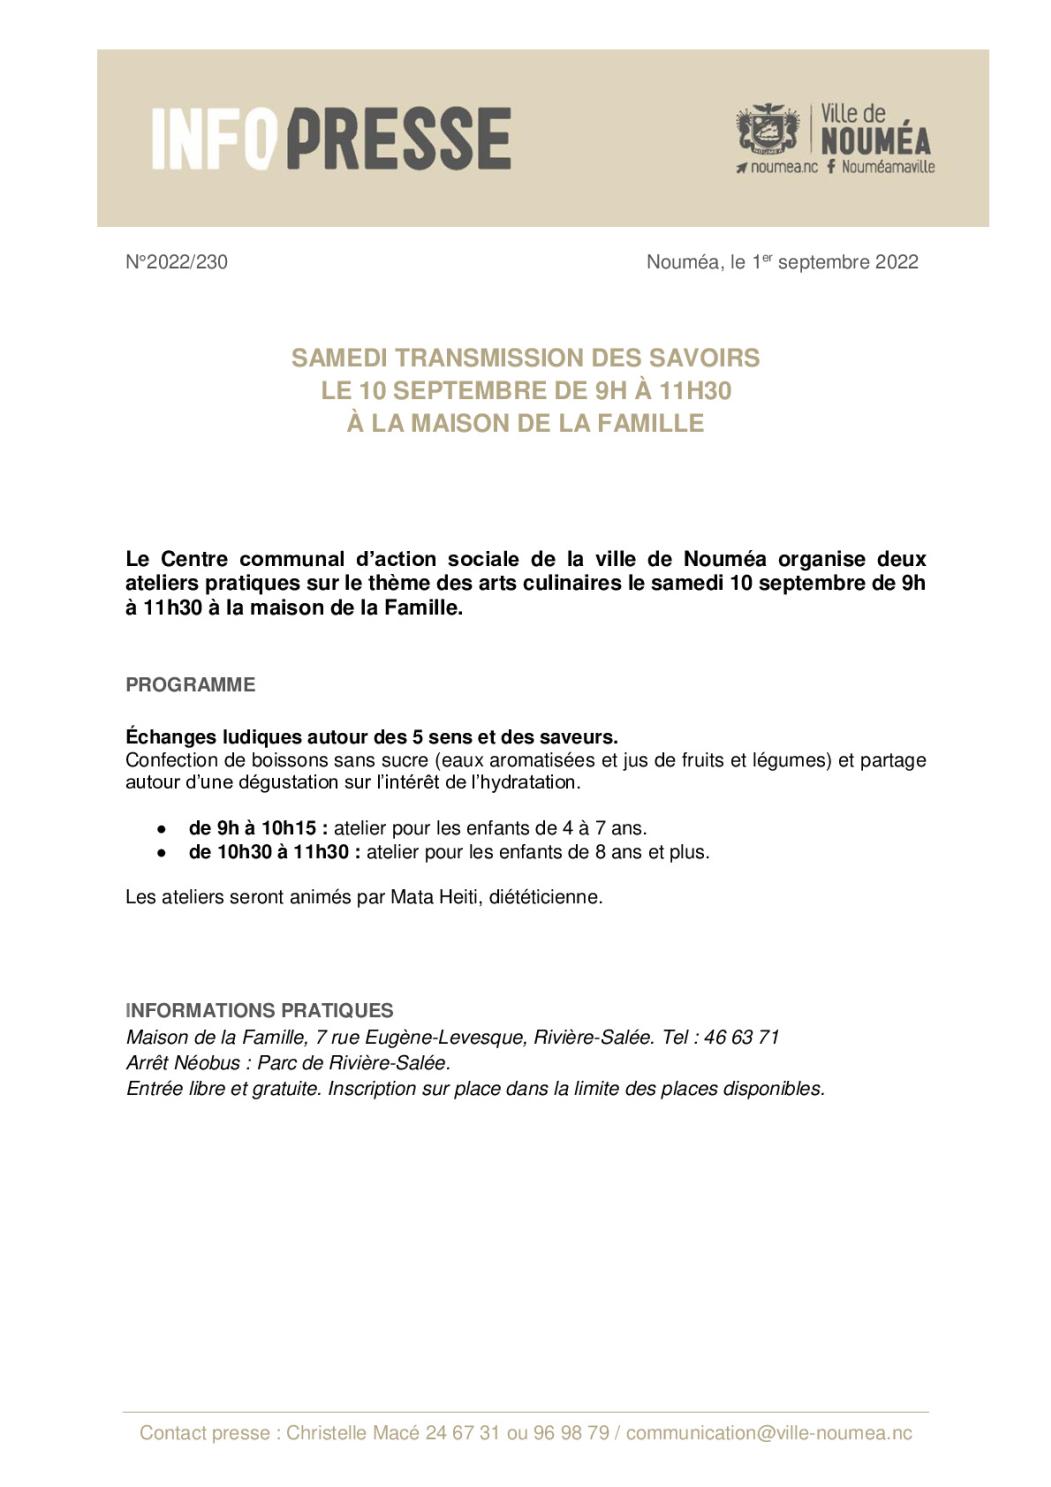 ip_230_samedi_transmission_des_savoirs1009.pdf